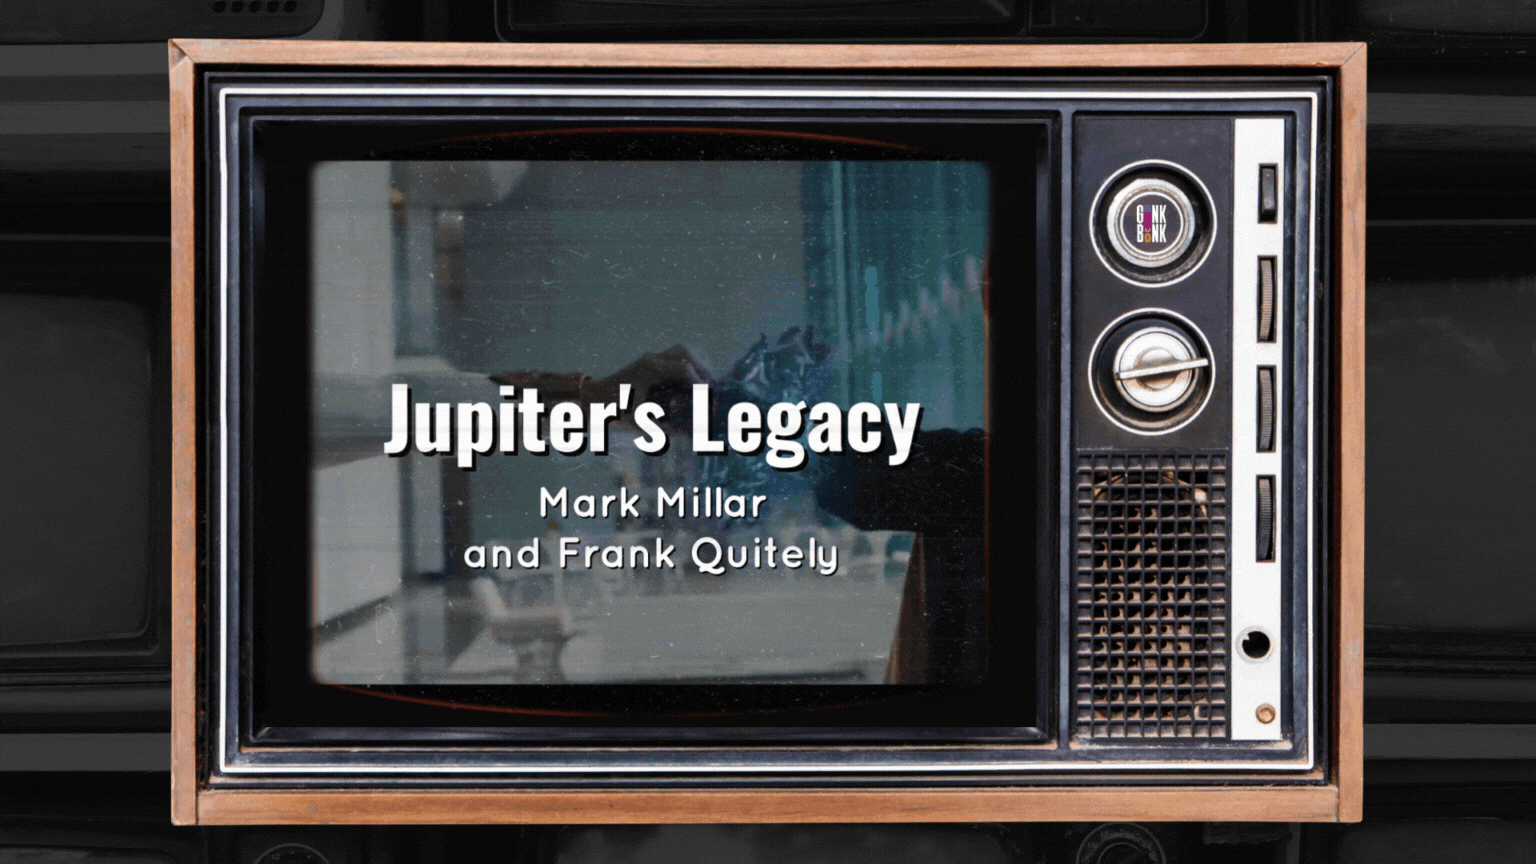 Jupiter's Legacy TV Show and Comics